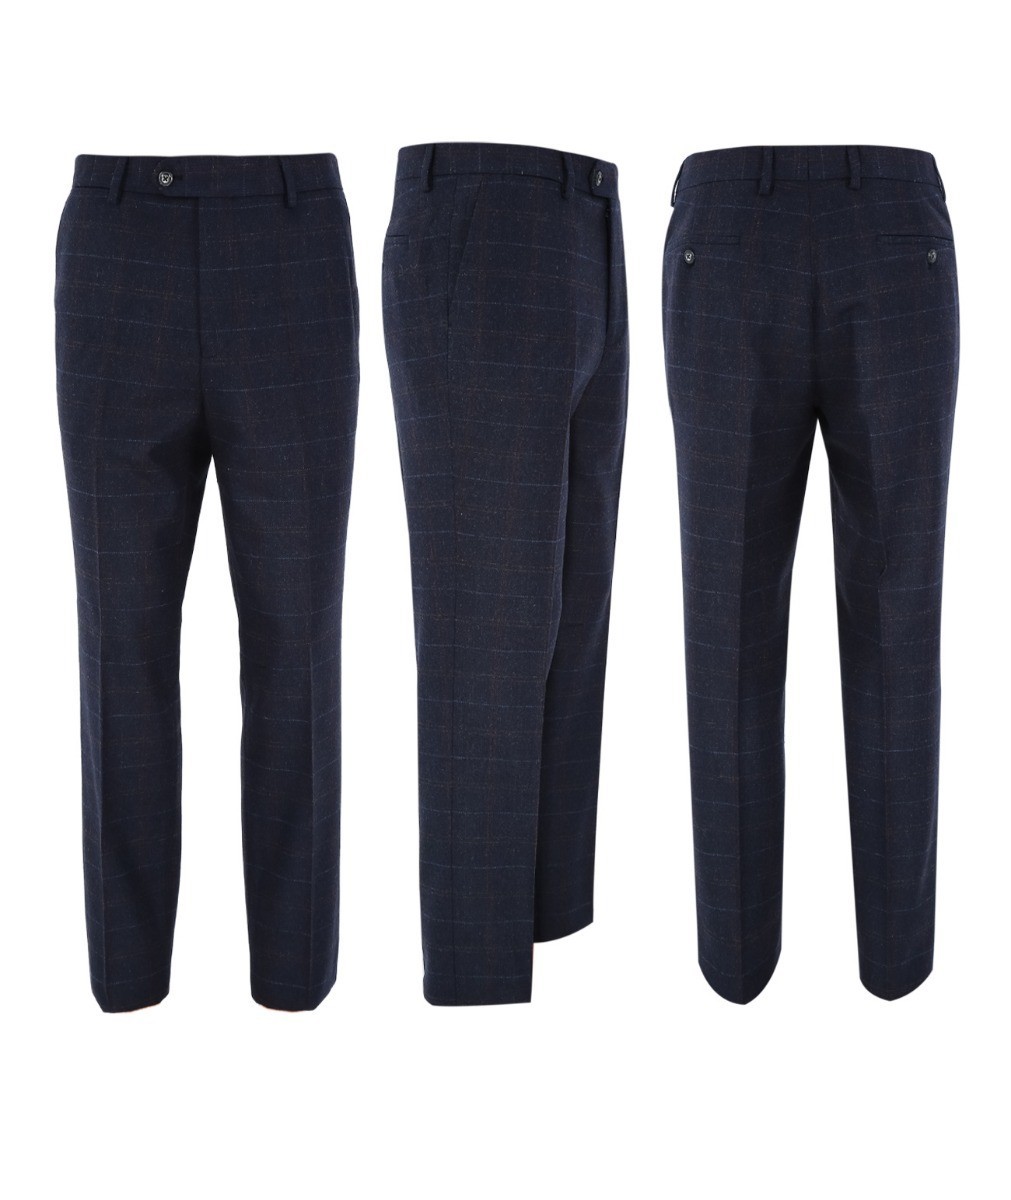 Men's Tweed Windowpane Tailored Fit Navy Pants - RYAN